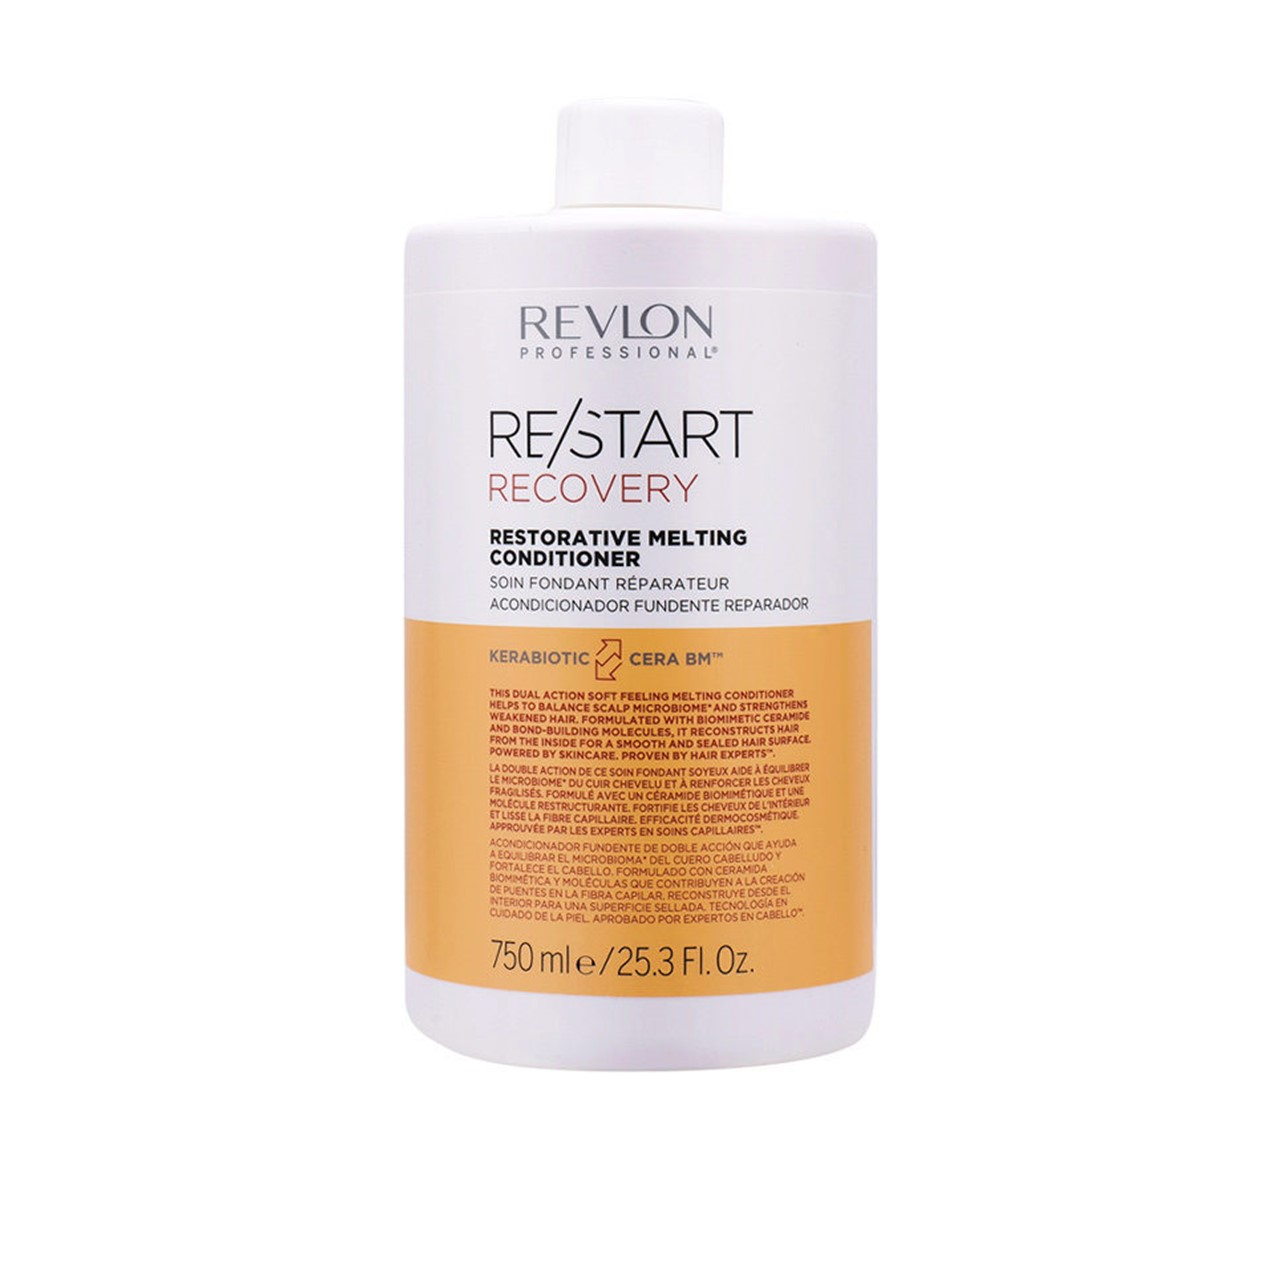 Revlon · Buy Professional Restorative Re/Start Melting Conditioner Recovery USA